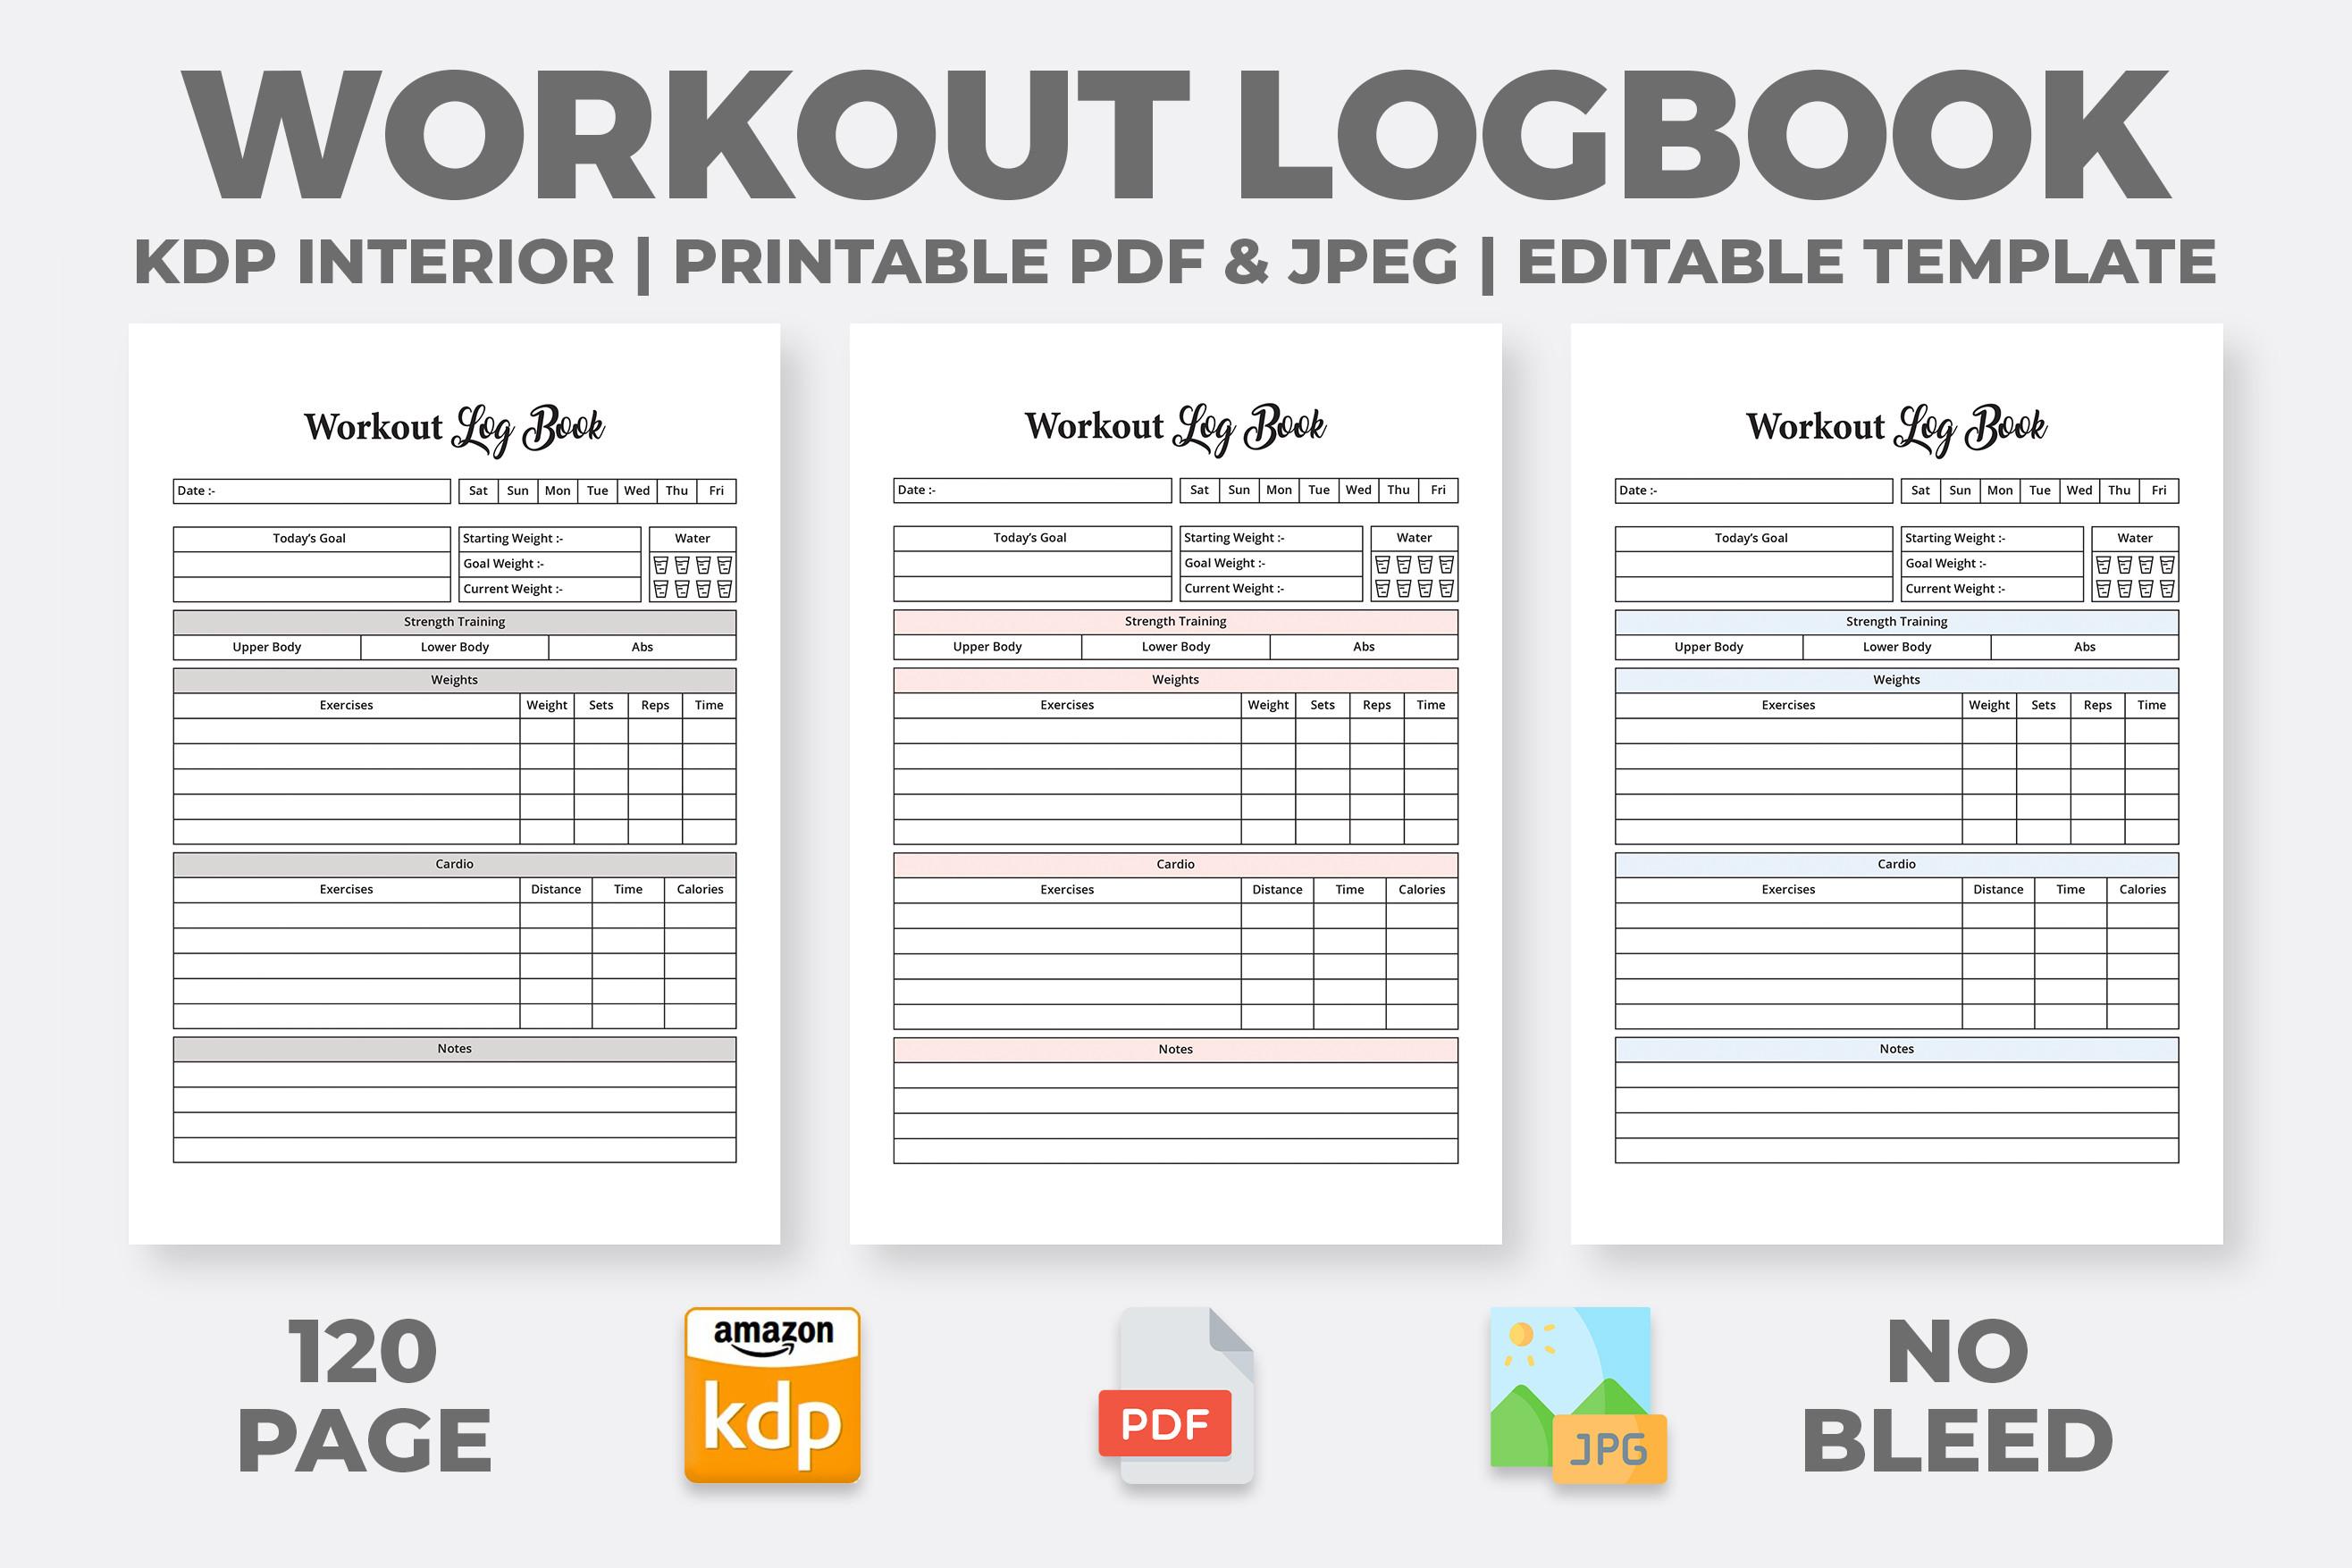 Workout Logbook - KDP Interior